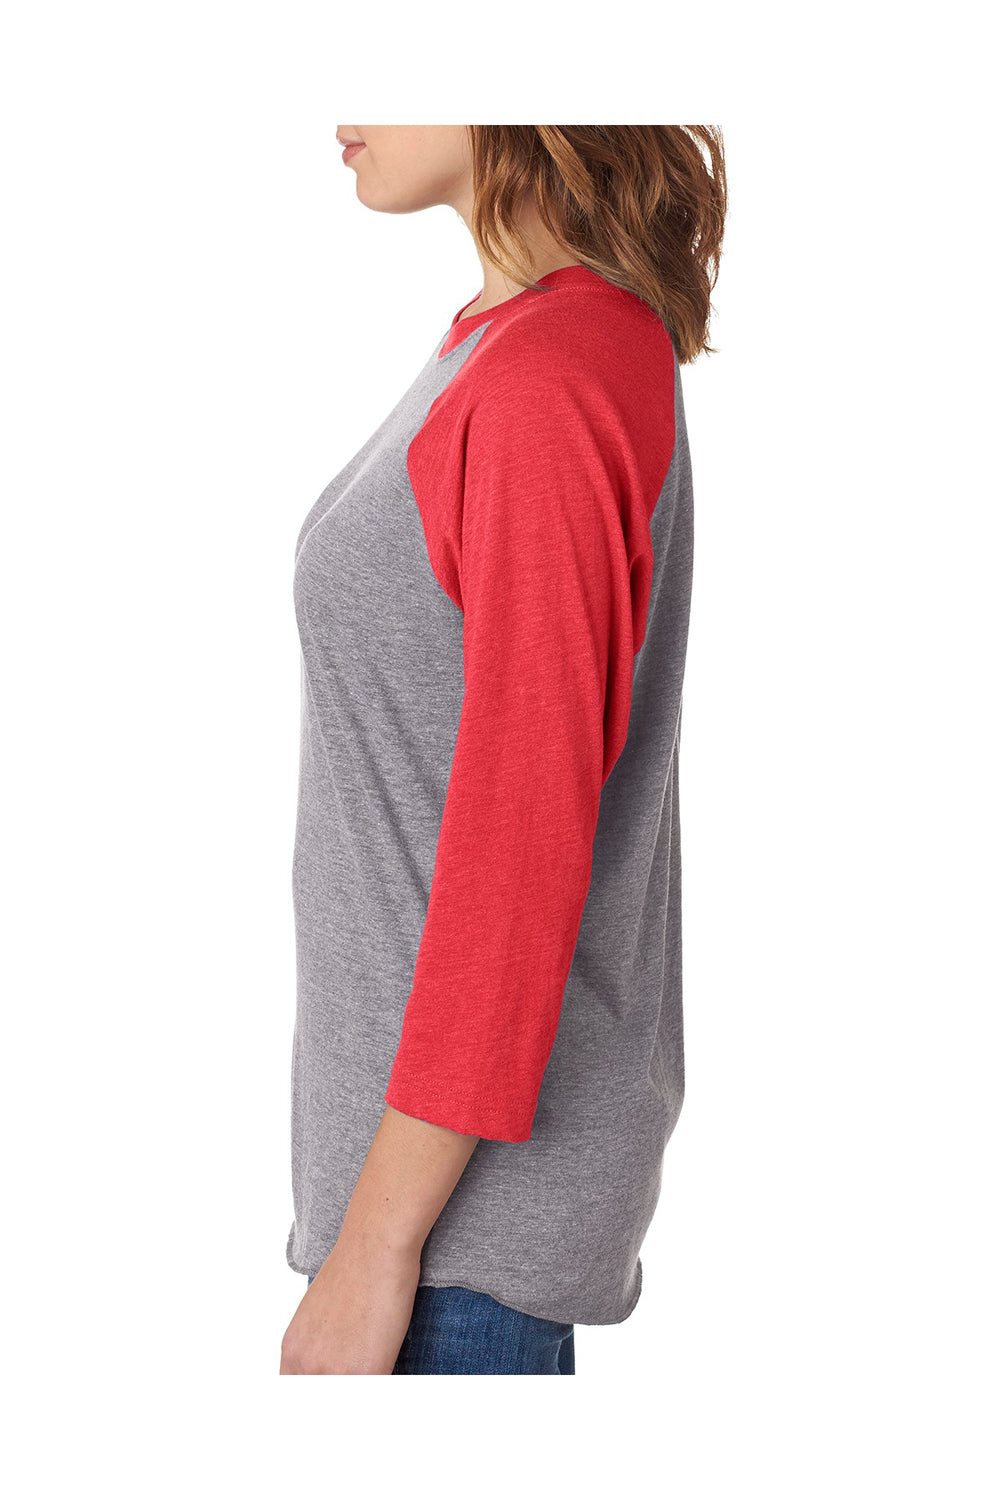 Next Level 6051 Mens Jersey 3/4 Sleeve Crewneck T-Shirt Heather Grey/Red Side